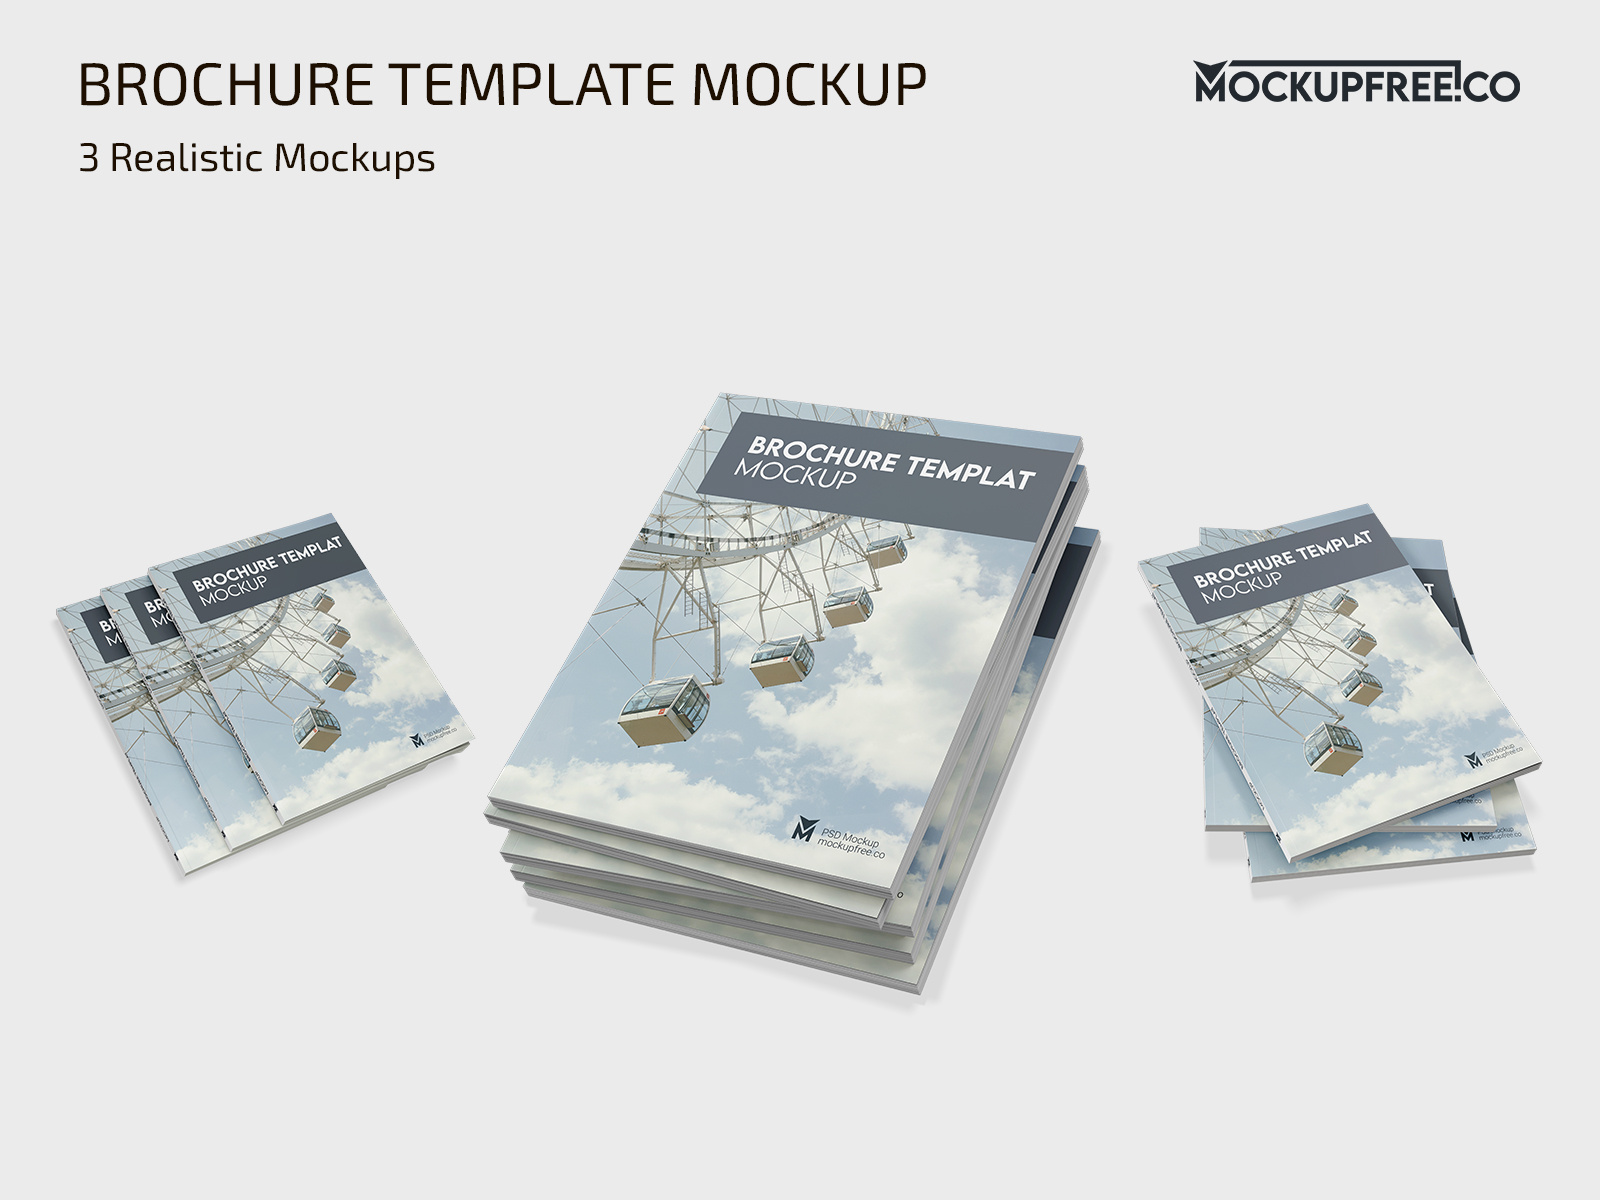 Free Brochure PSD Mockup Template by mockupfree.co on Dribbble